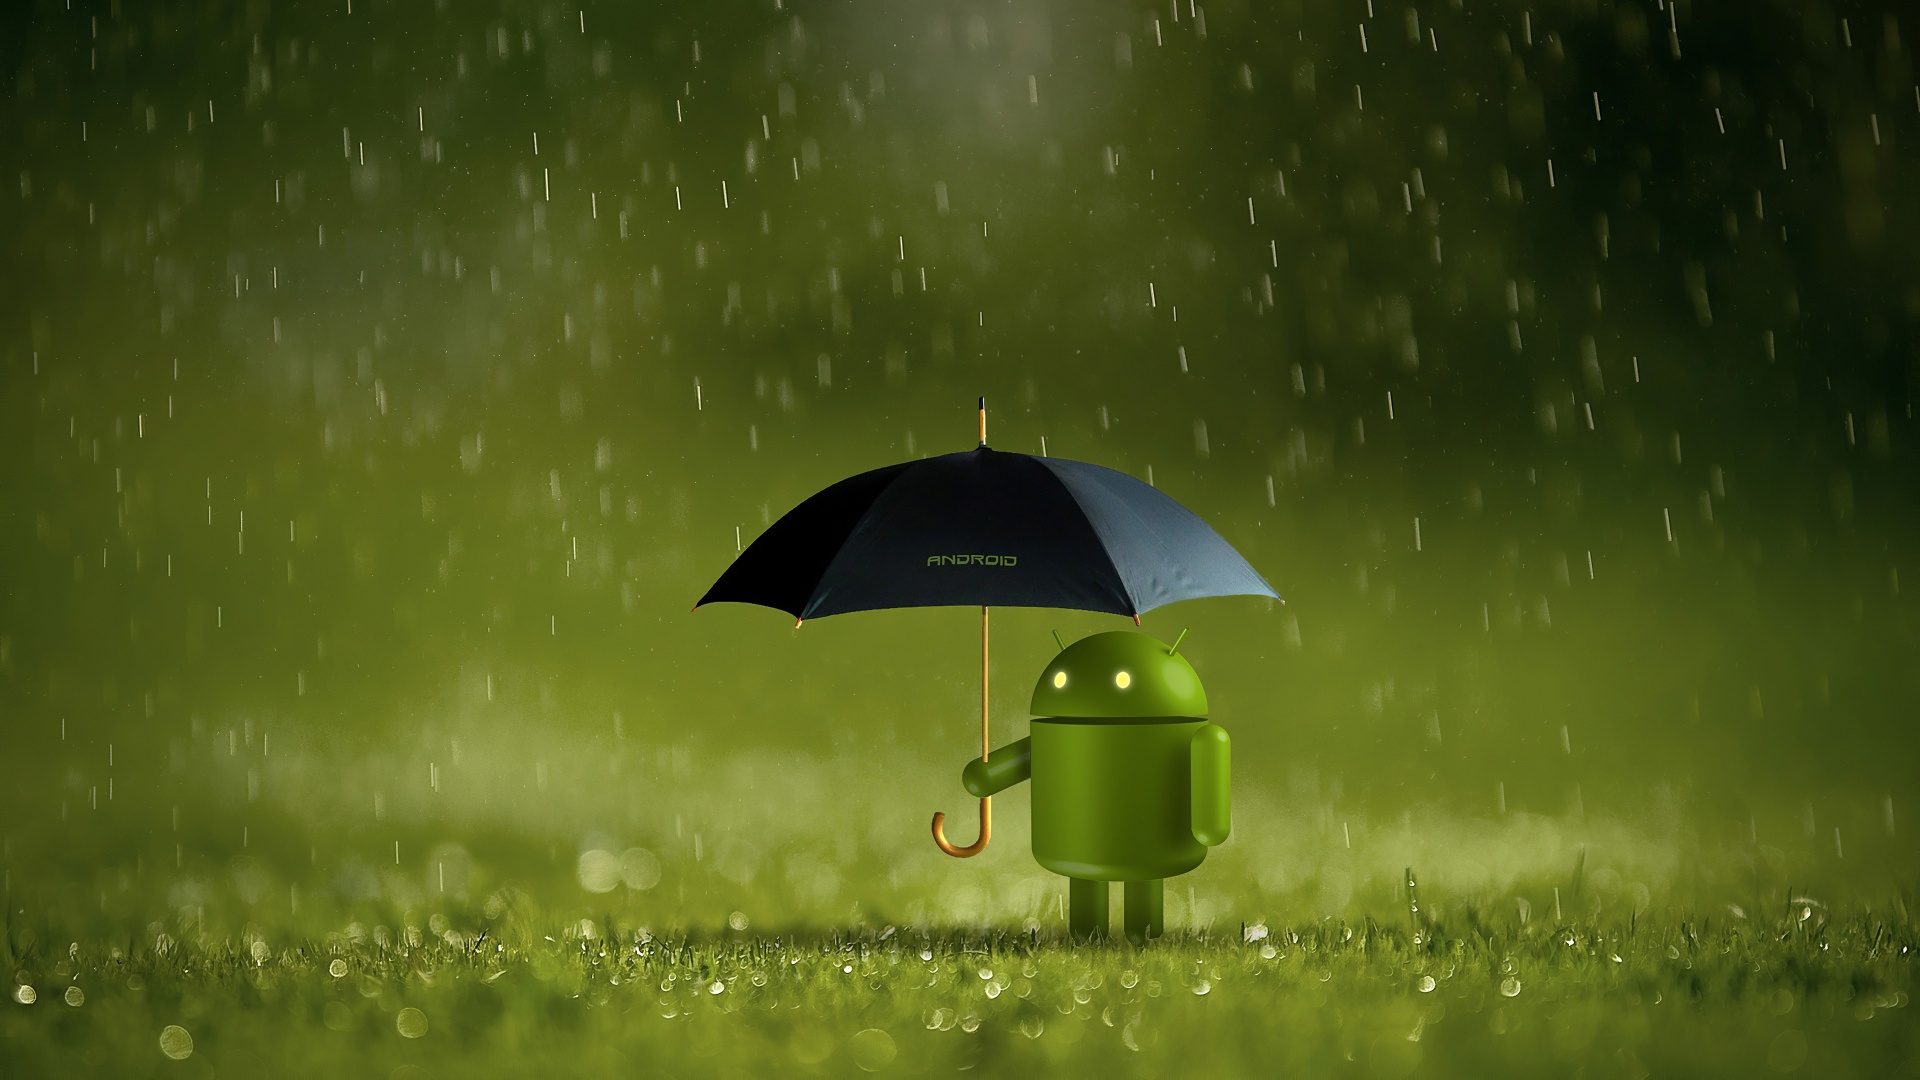 Android logo 4K Wallpaper, Android robot, Umbrella, Rain, Green, Technology, #1571